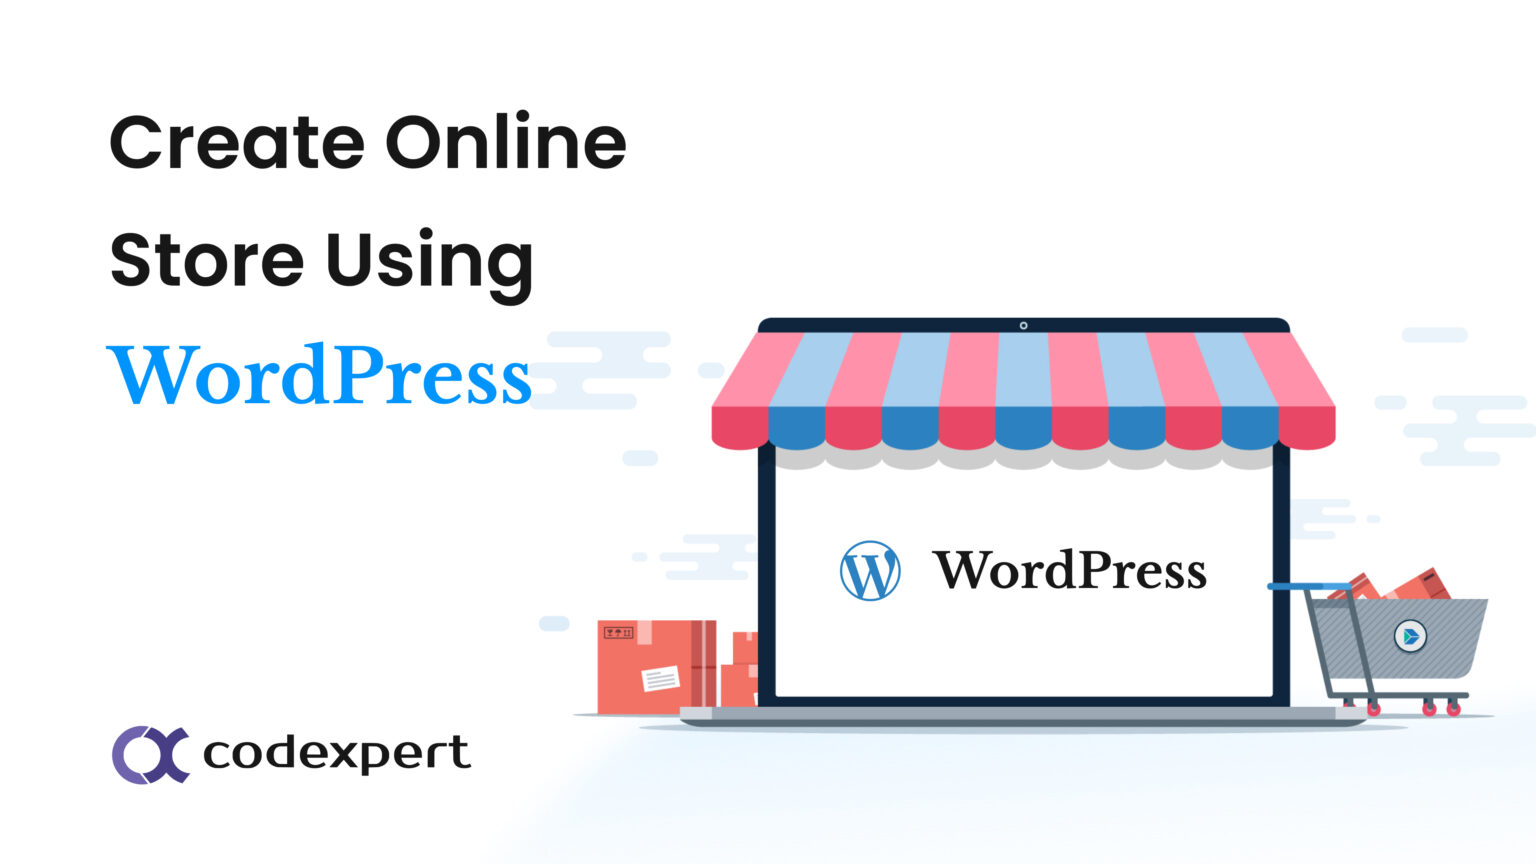 Creating an online store using WordPress